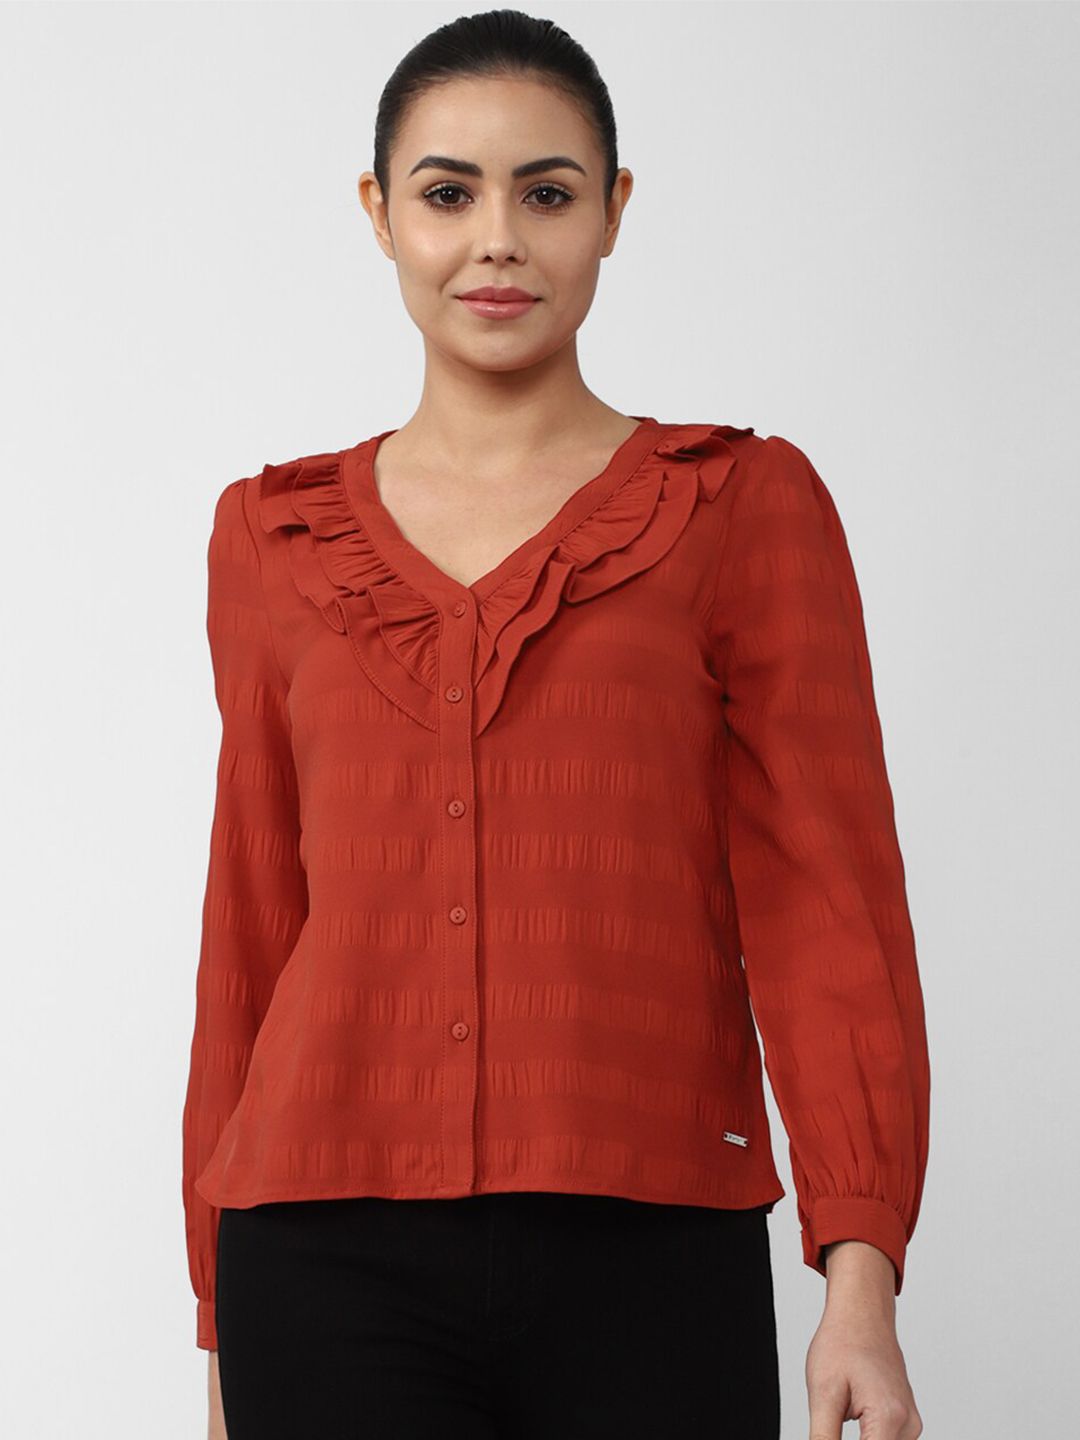 Van Heusen Woman Women Rust Ruffles Shirt Style Top Price in India